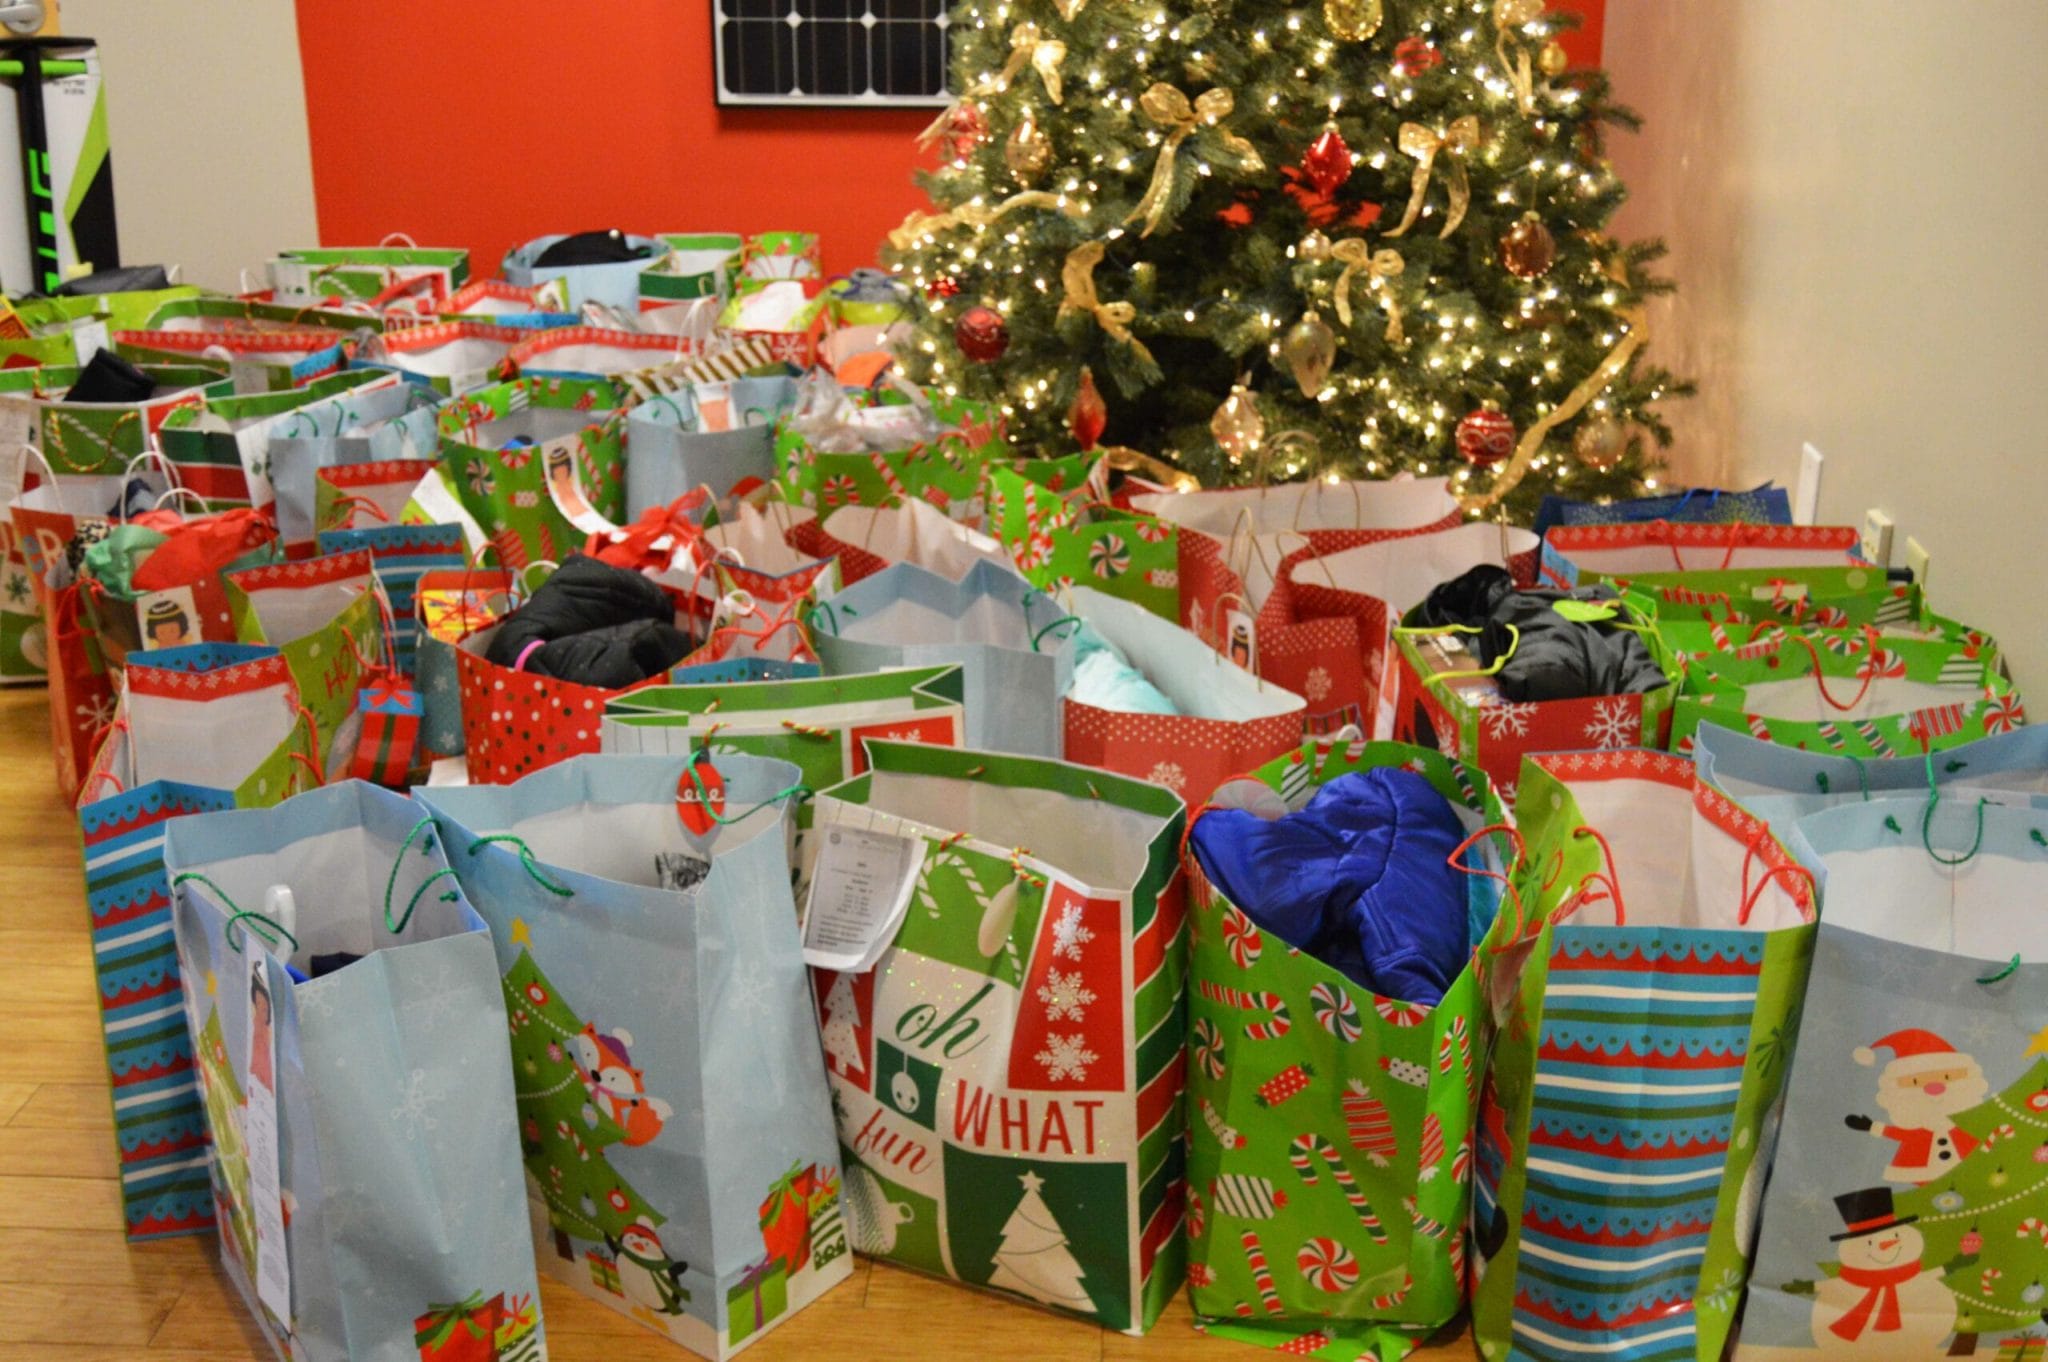 Resource Box Header Strata Team “Adopts” 125 Children for Holiday Gifts